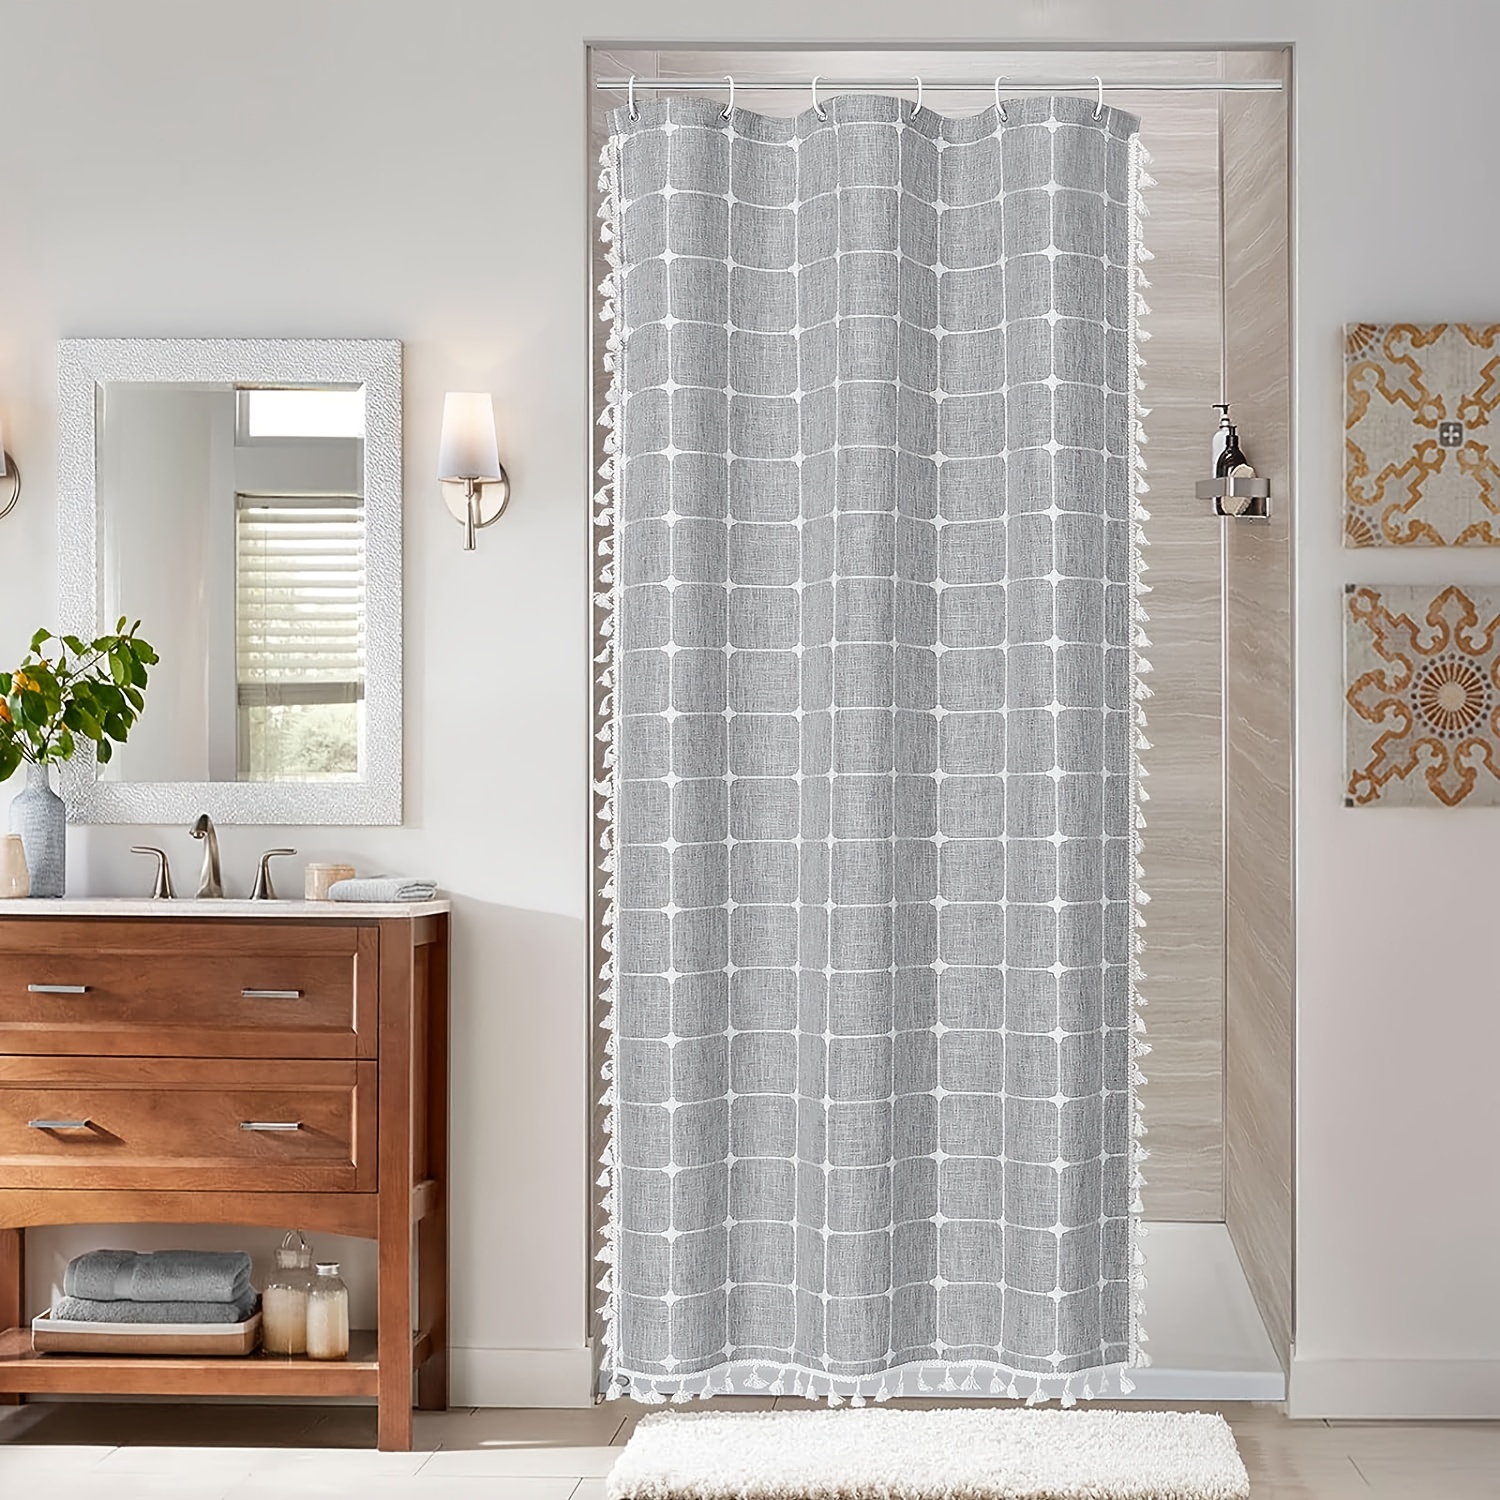 Cortinas de tela texturizada solida para baño 72x72